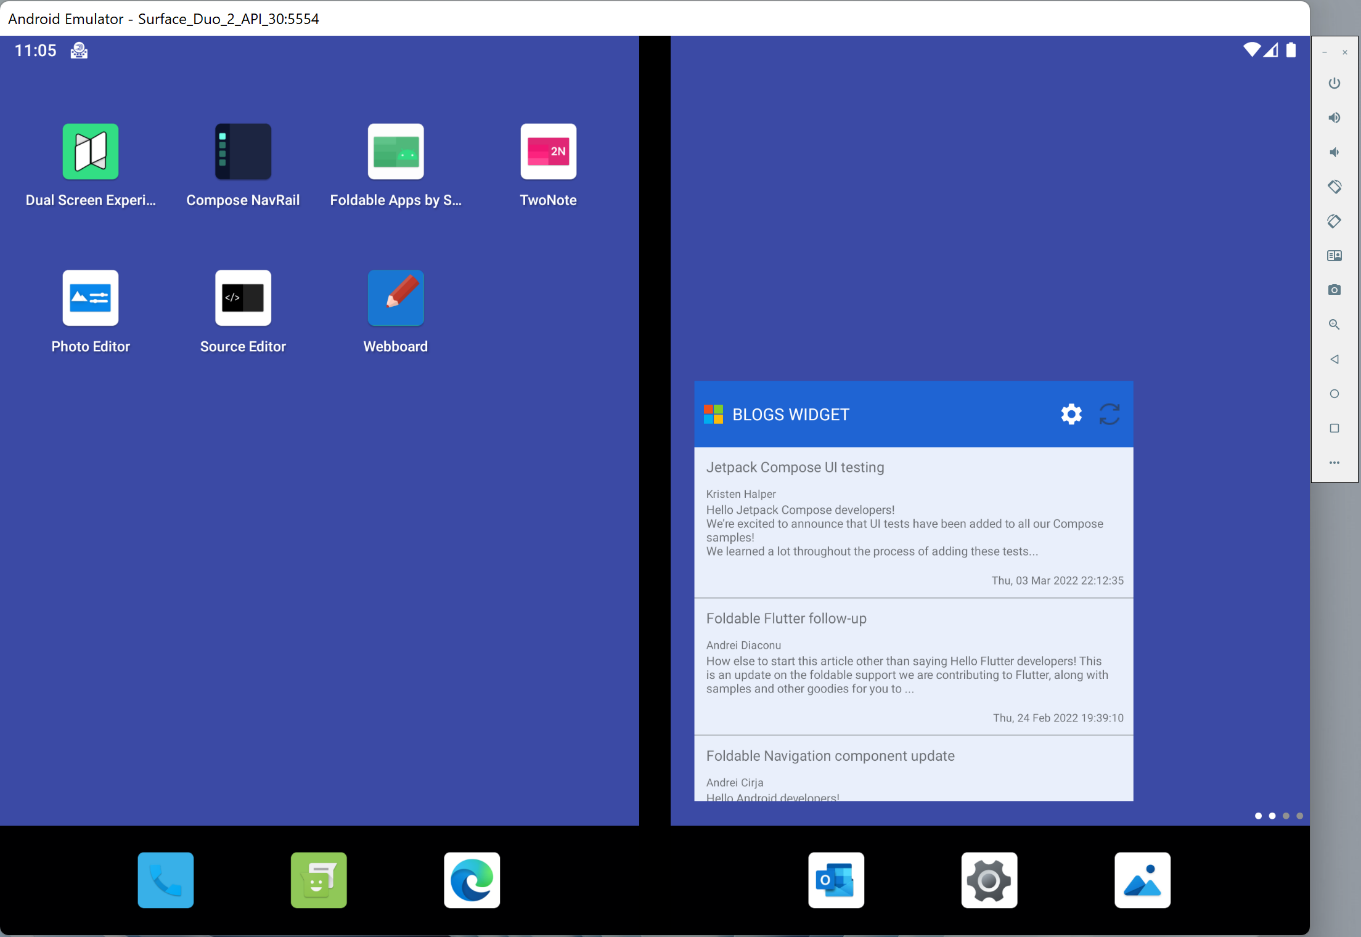 Surface Duo emulator screenshot showing home screen icons and news widget